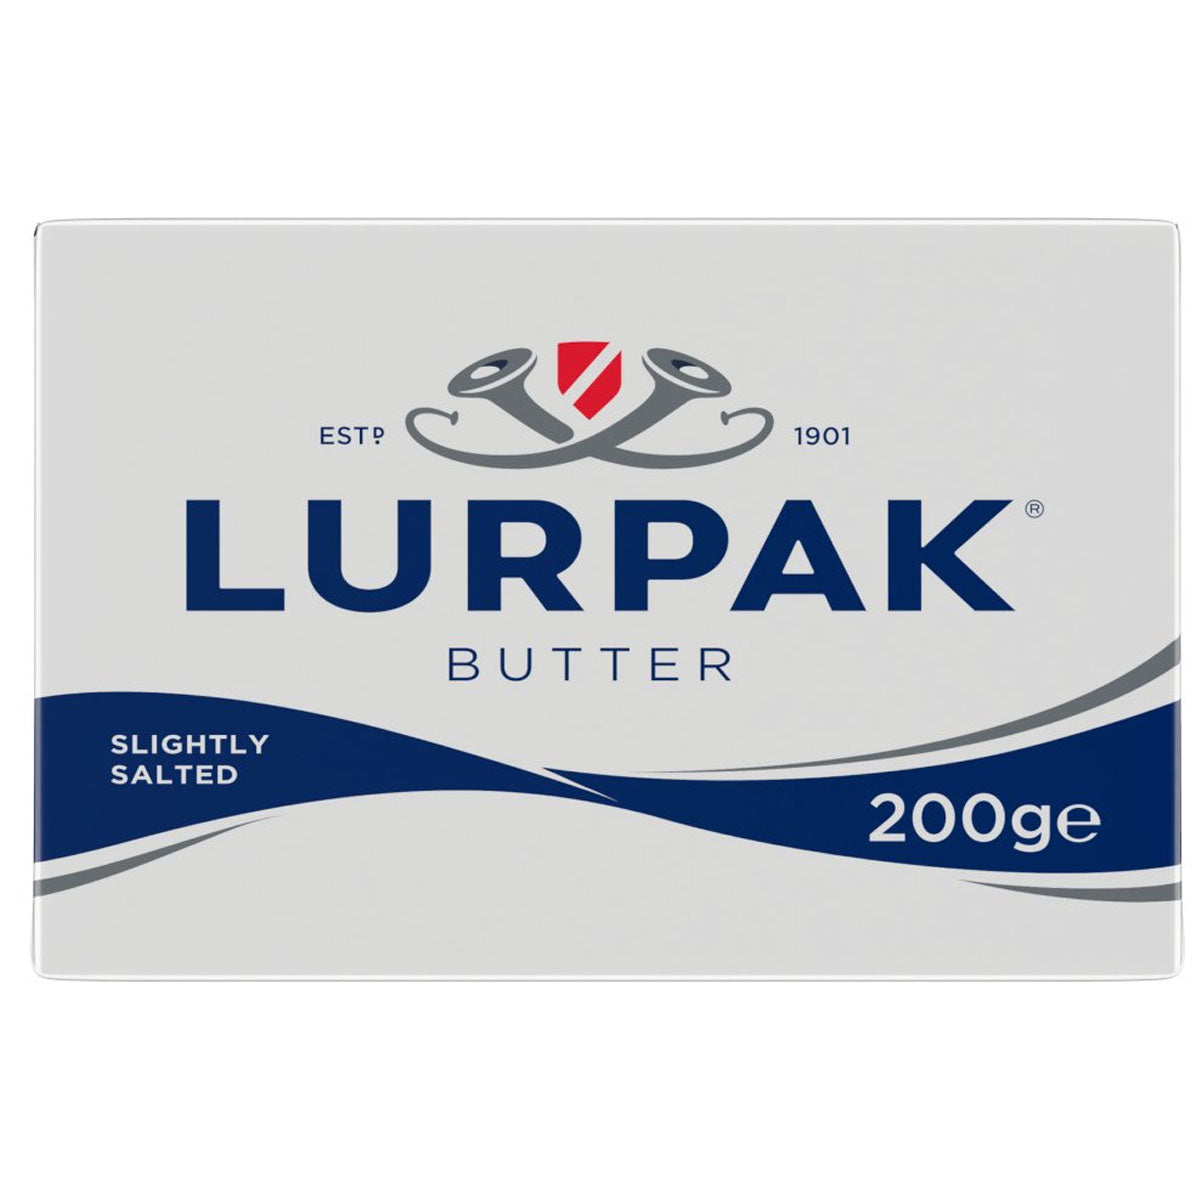 Lurpak - Slightly Salted Butter - 200g - Continental Food Store